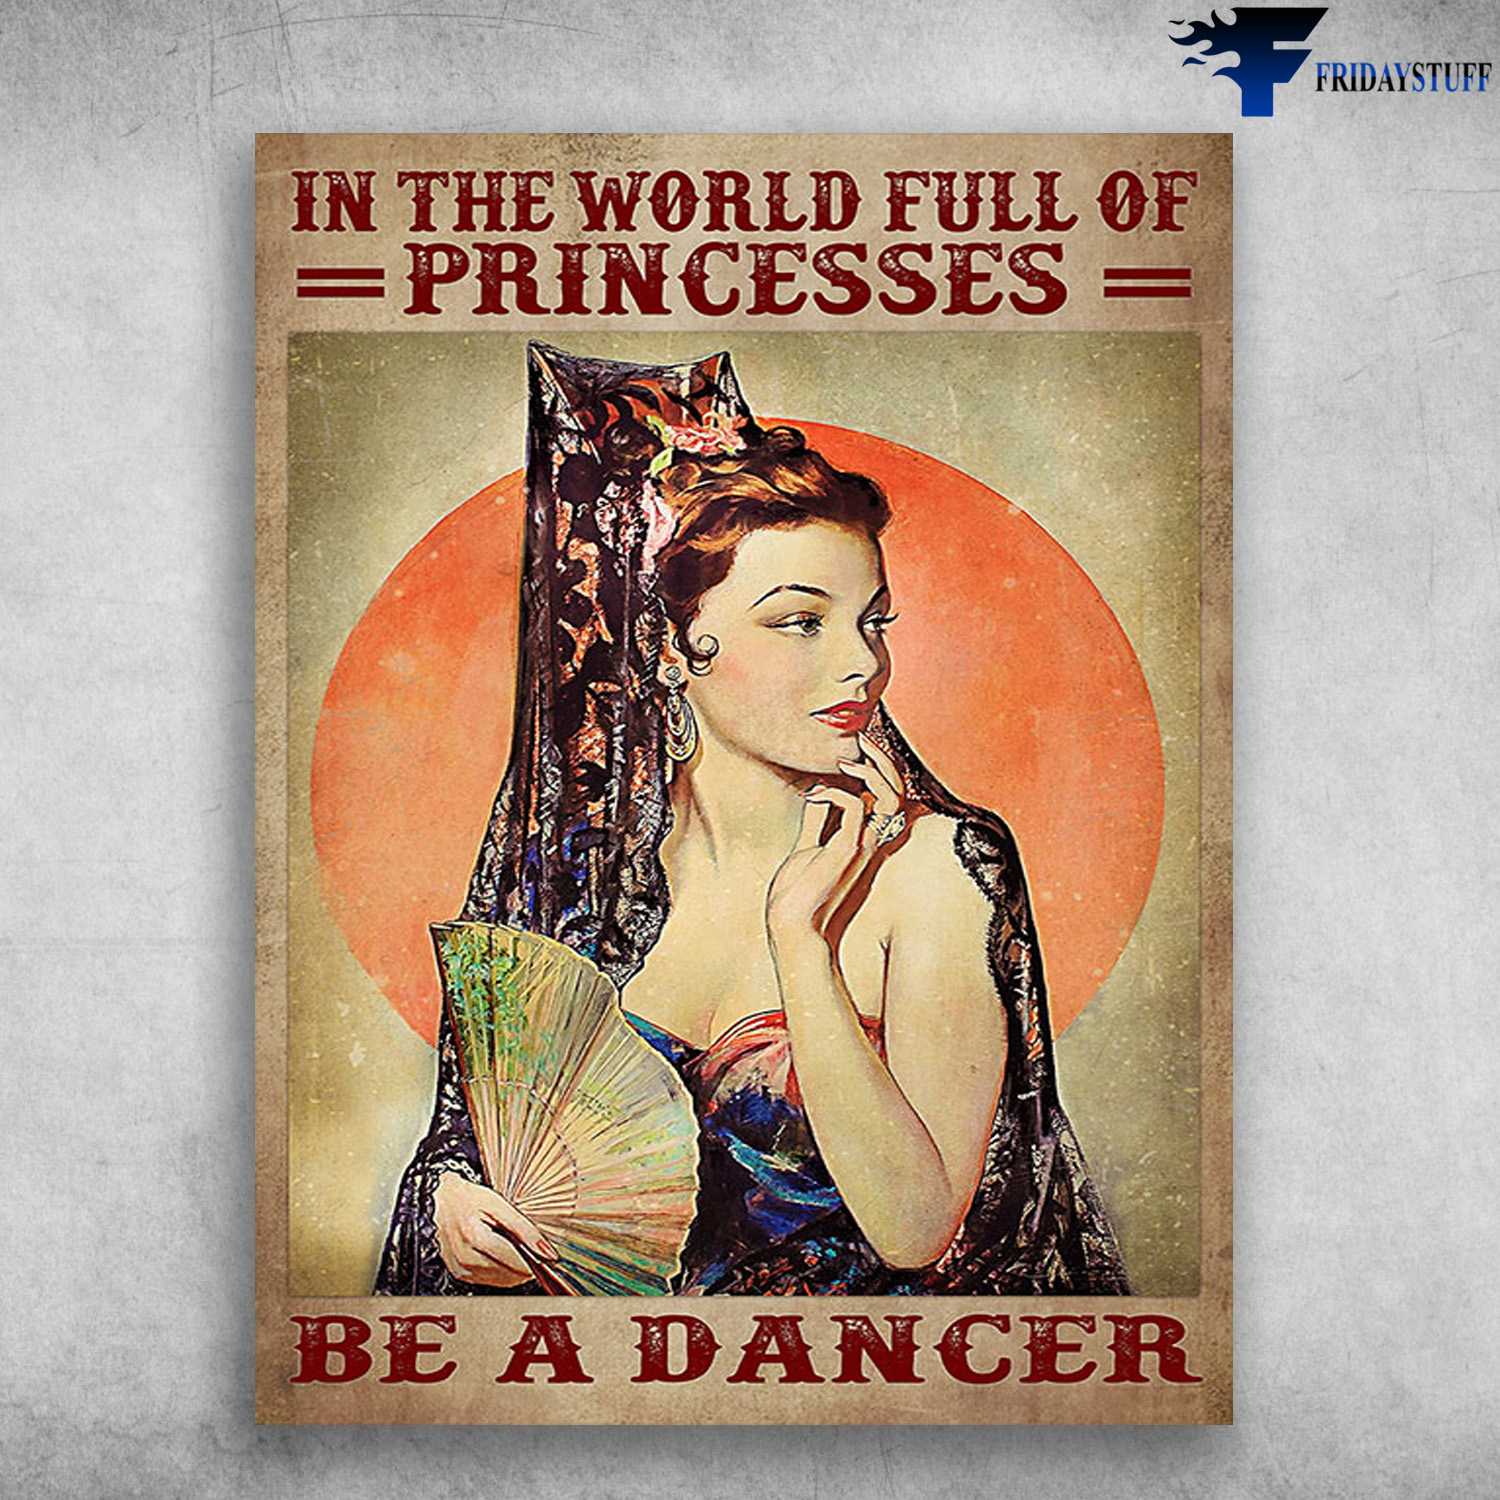 Dancer Girl, Beautiful Girl - In The World Full Of Princess, Be A Dancer